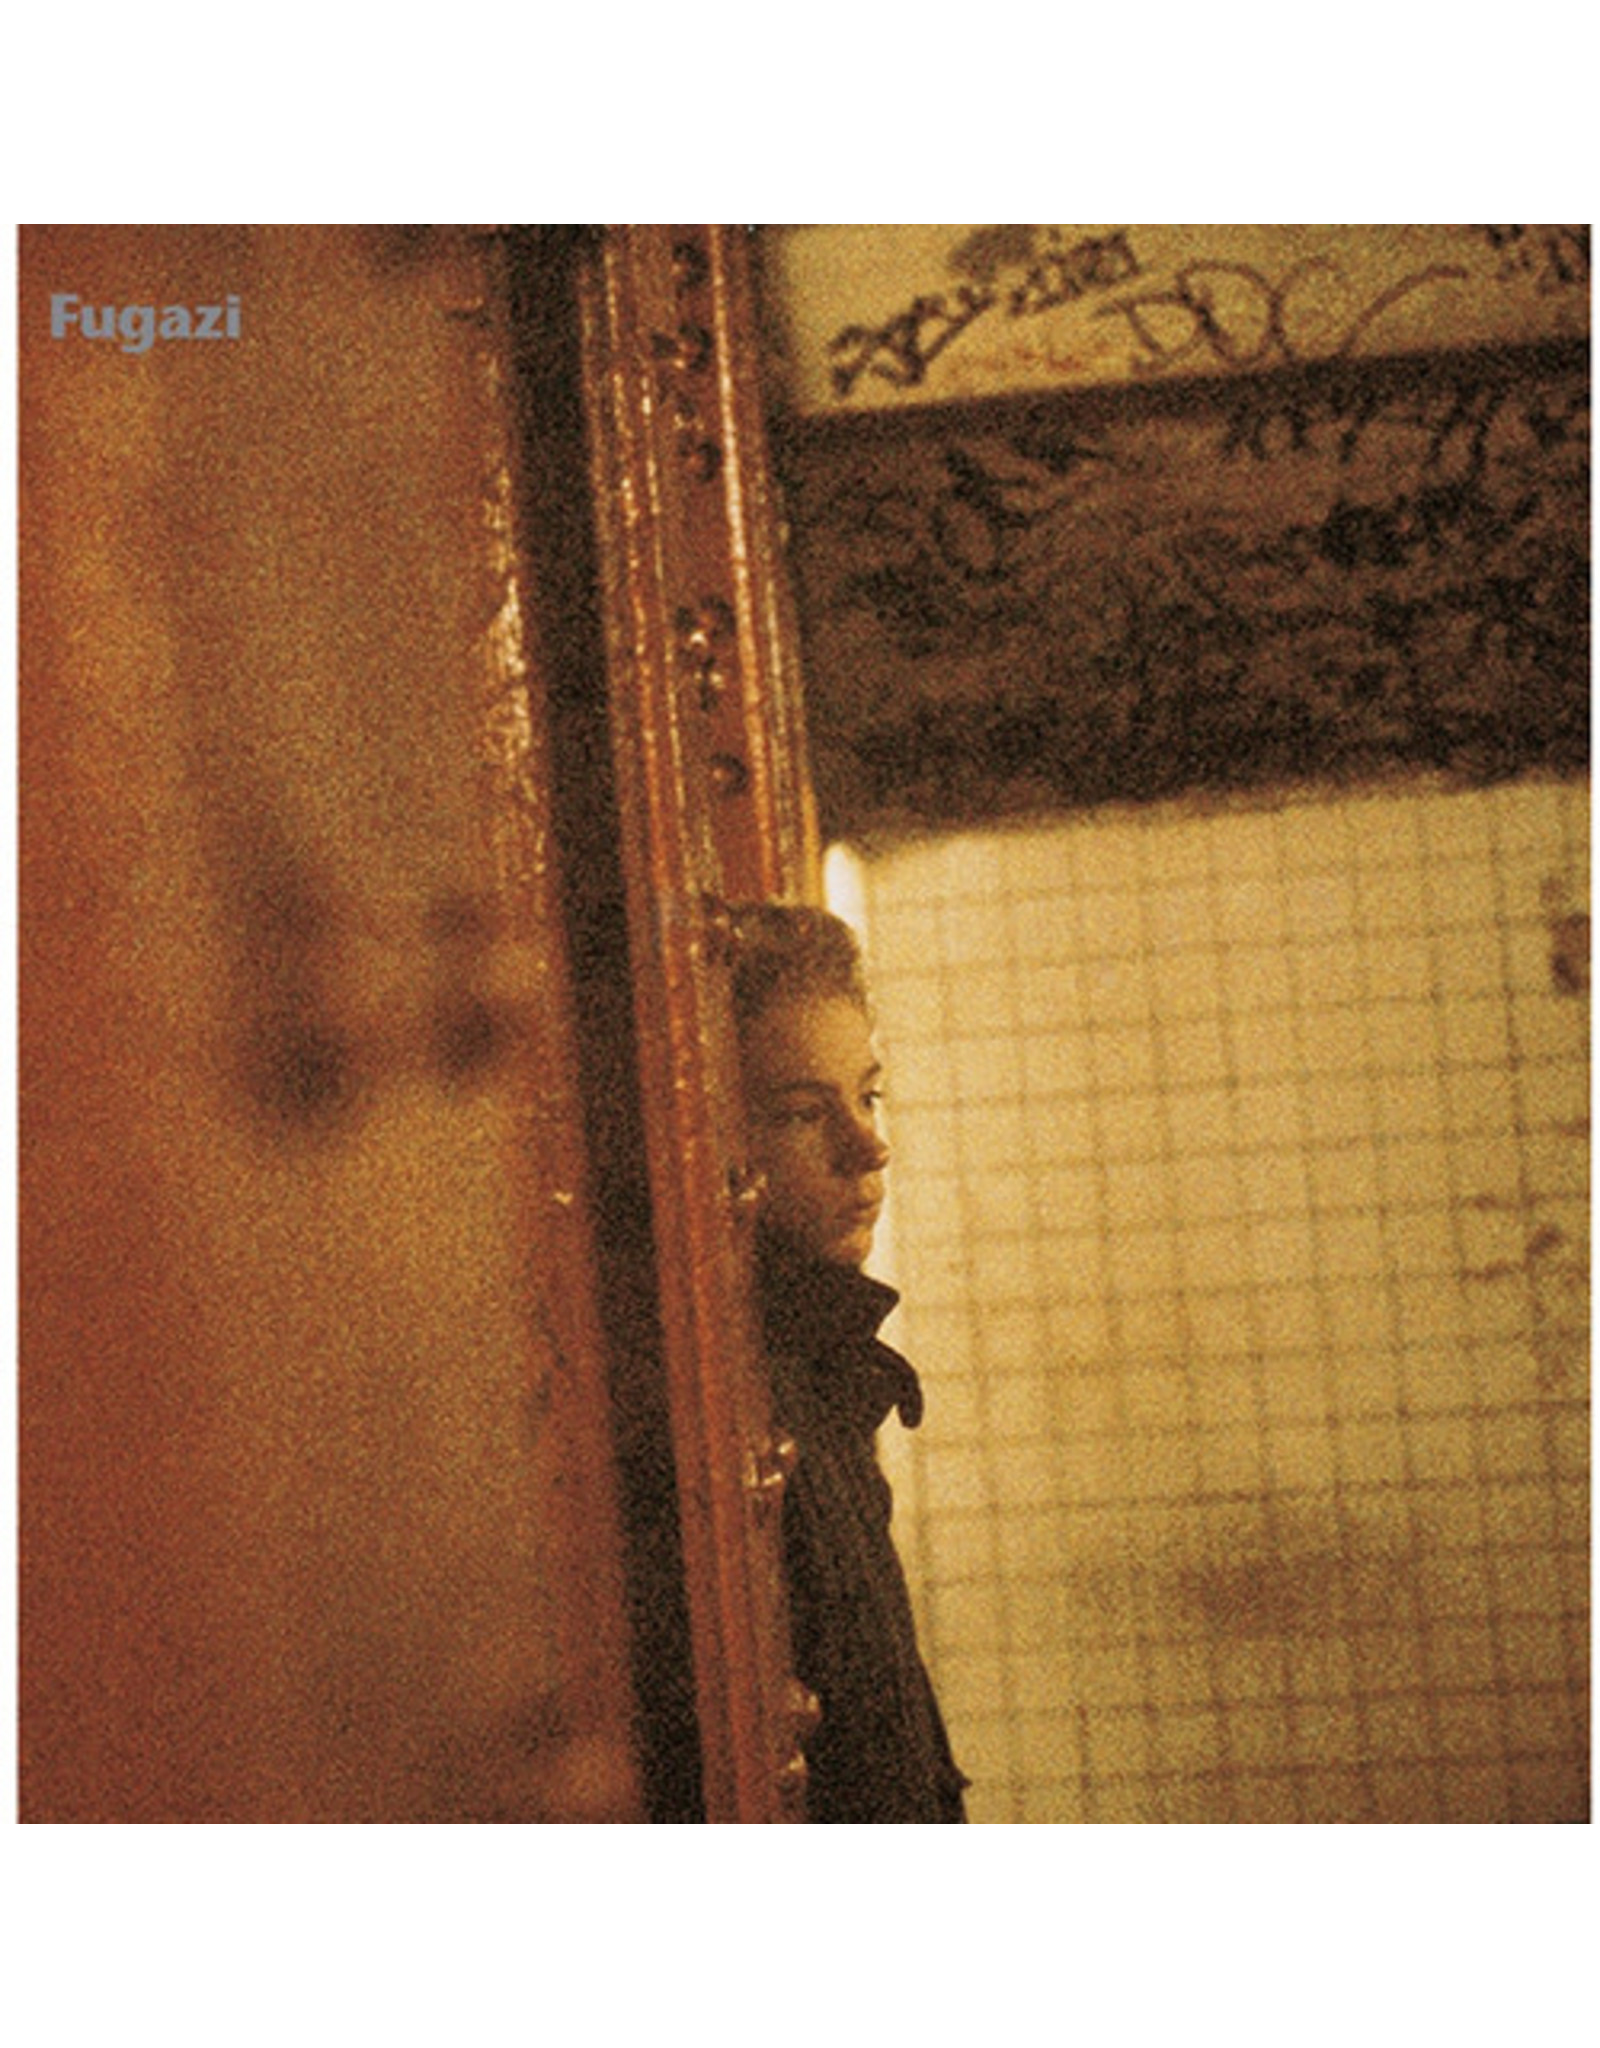 Dischord Fugazi: Steady Diet of Nothing LP